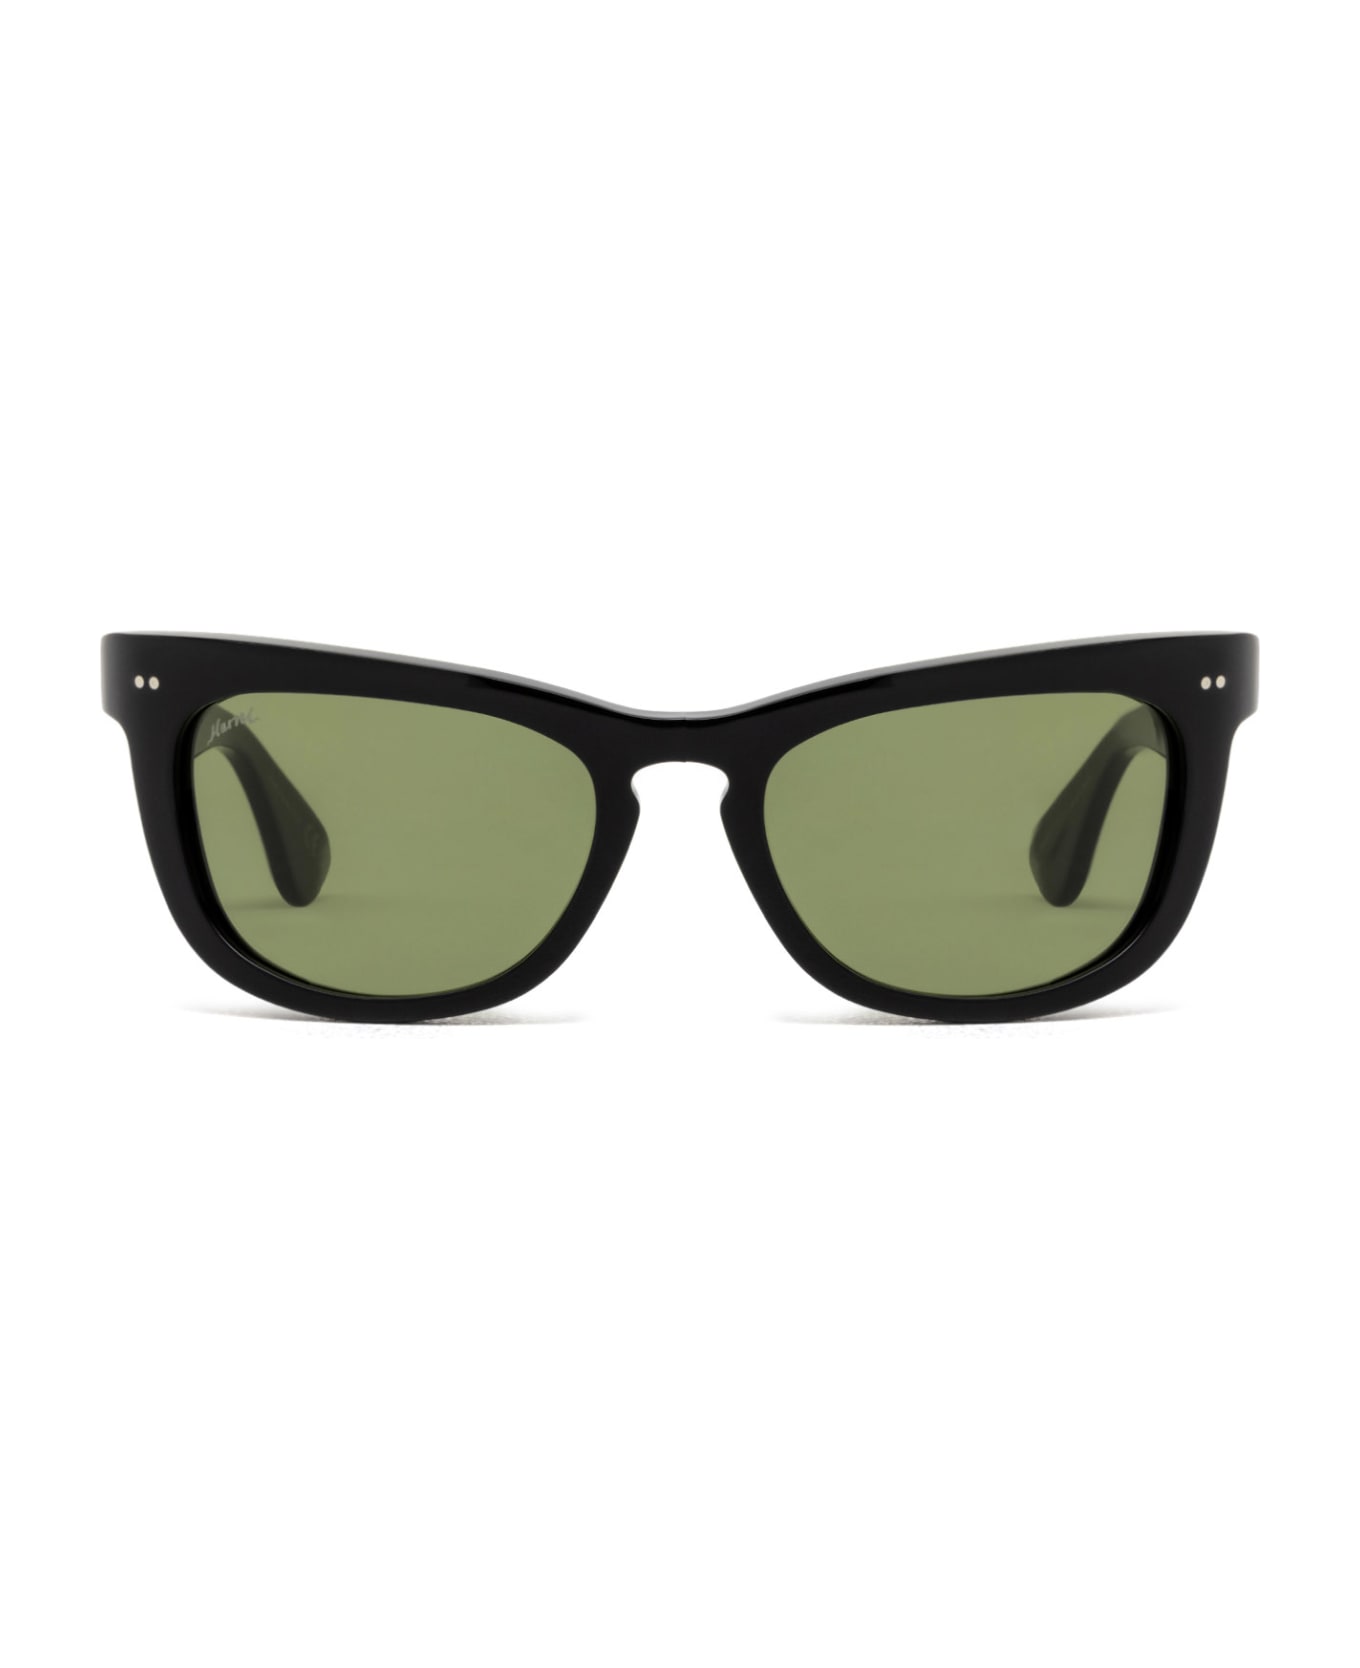 Marni Eyewear Isamu Black Green Sunglasses - Black Green